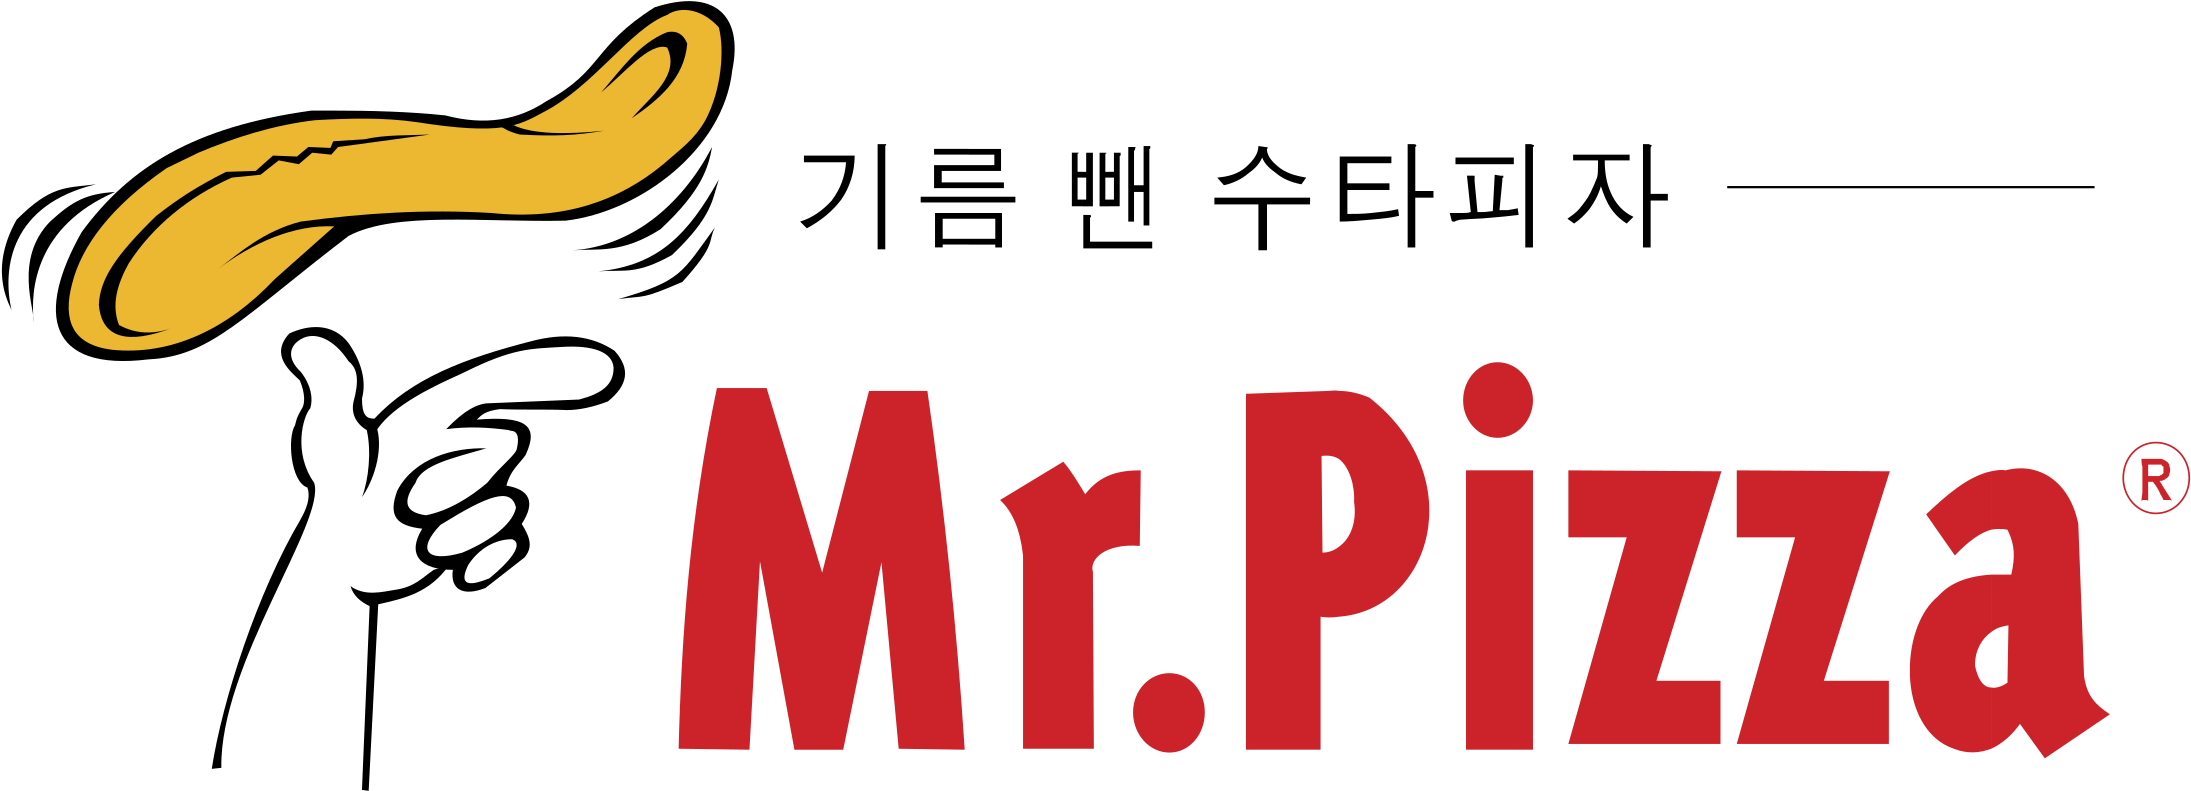 Mr Pizza Logo Png Transparent - Mr Pizza Png Clipart (2400x2400), Png Download